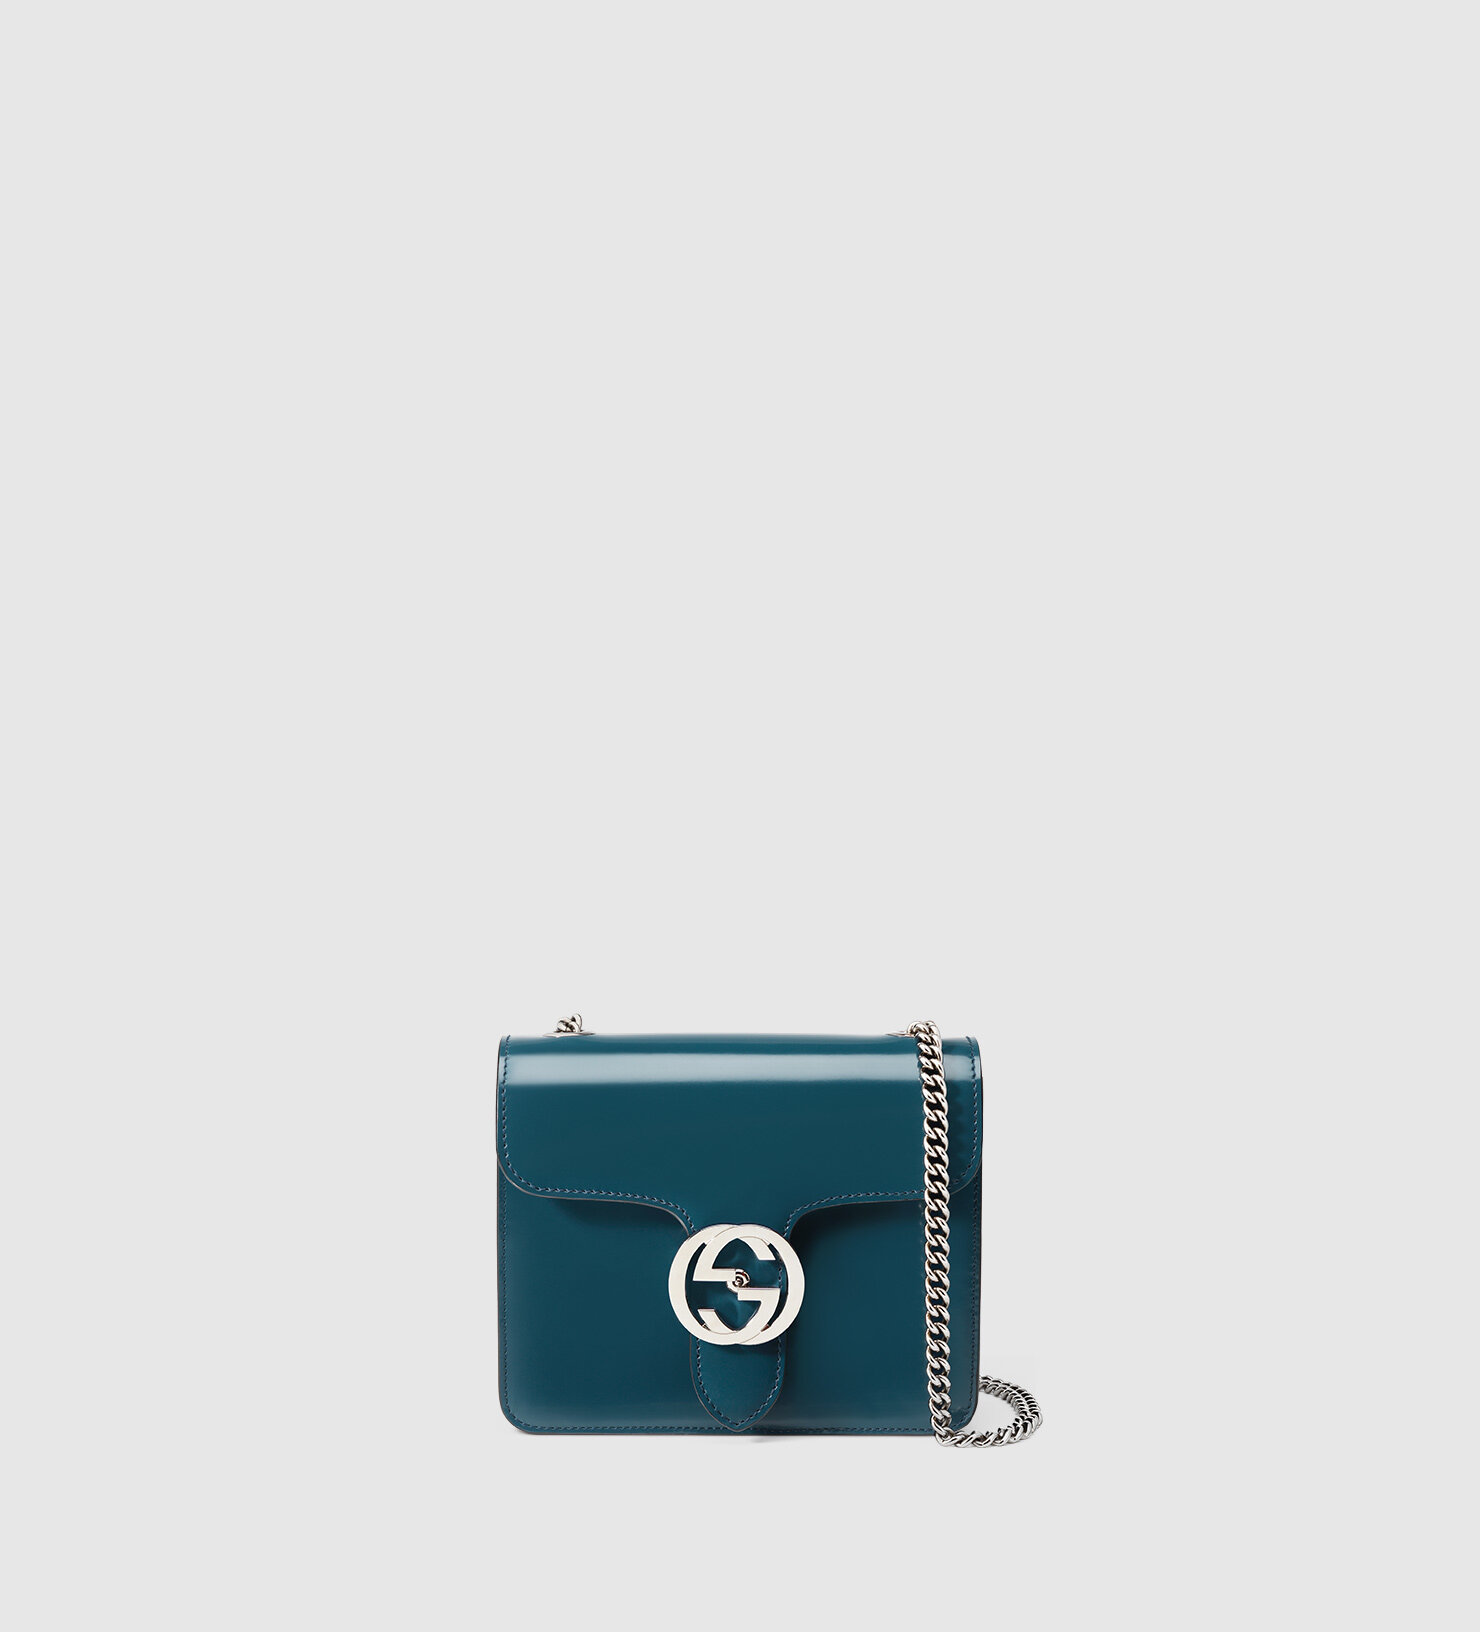 Gucci Small Interlocking Shoulder Bag in Blue Polished Leather.jpg